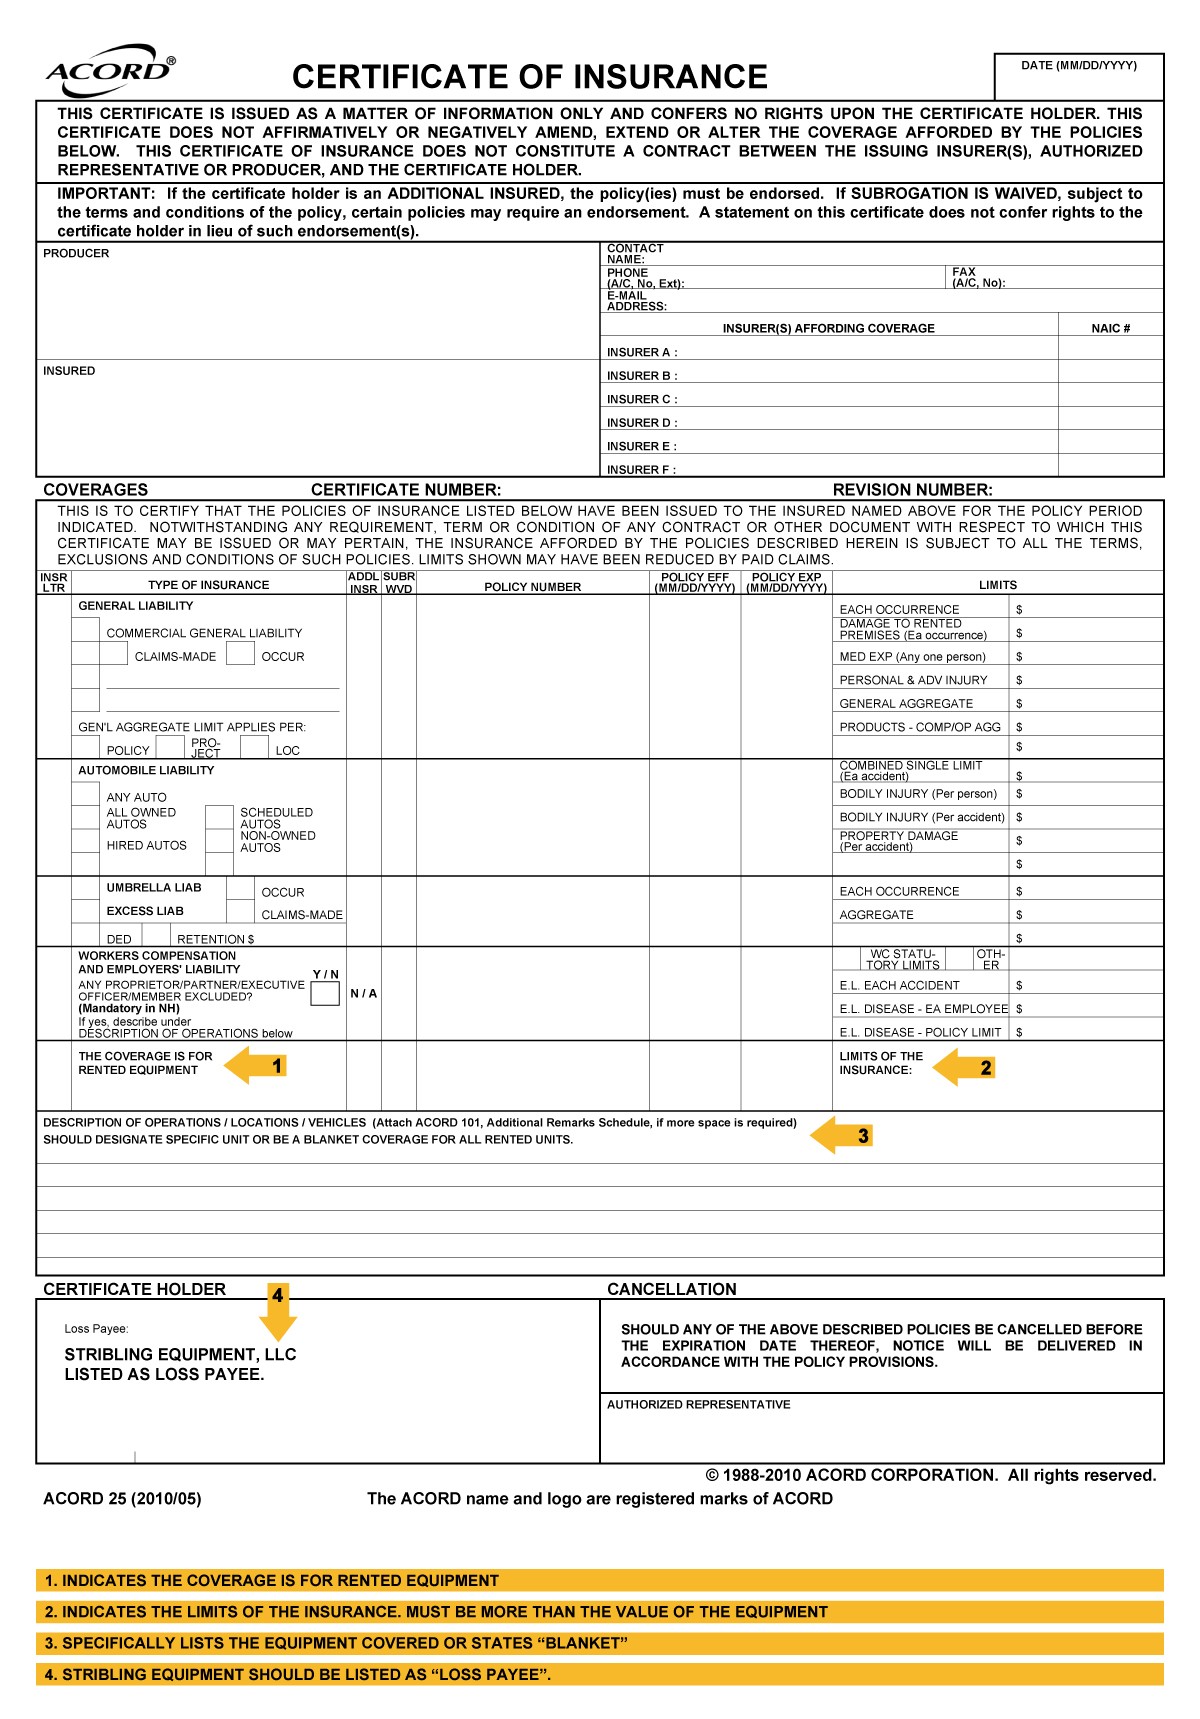 Rental Insurance Guide Stribling Equipment LLC Document Accord Certificate